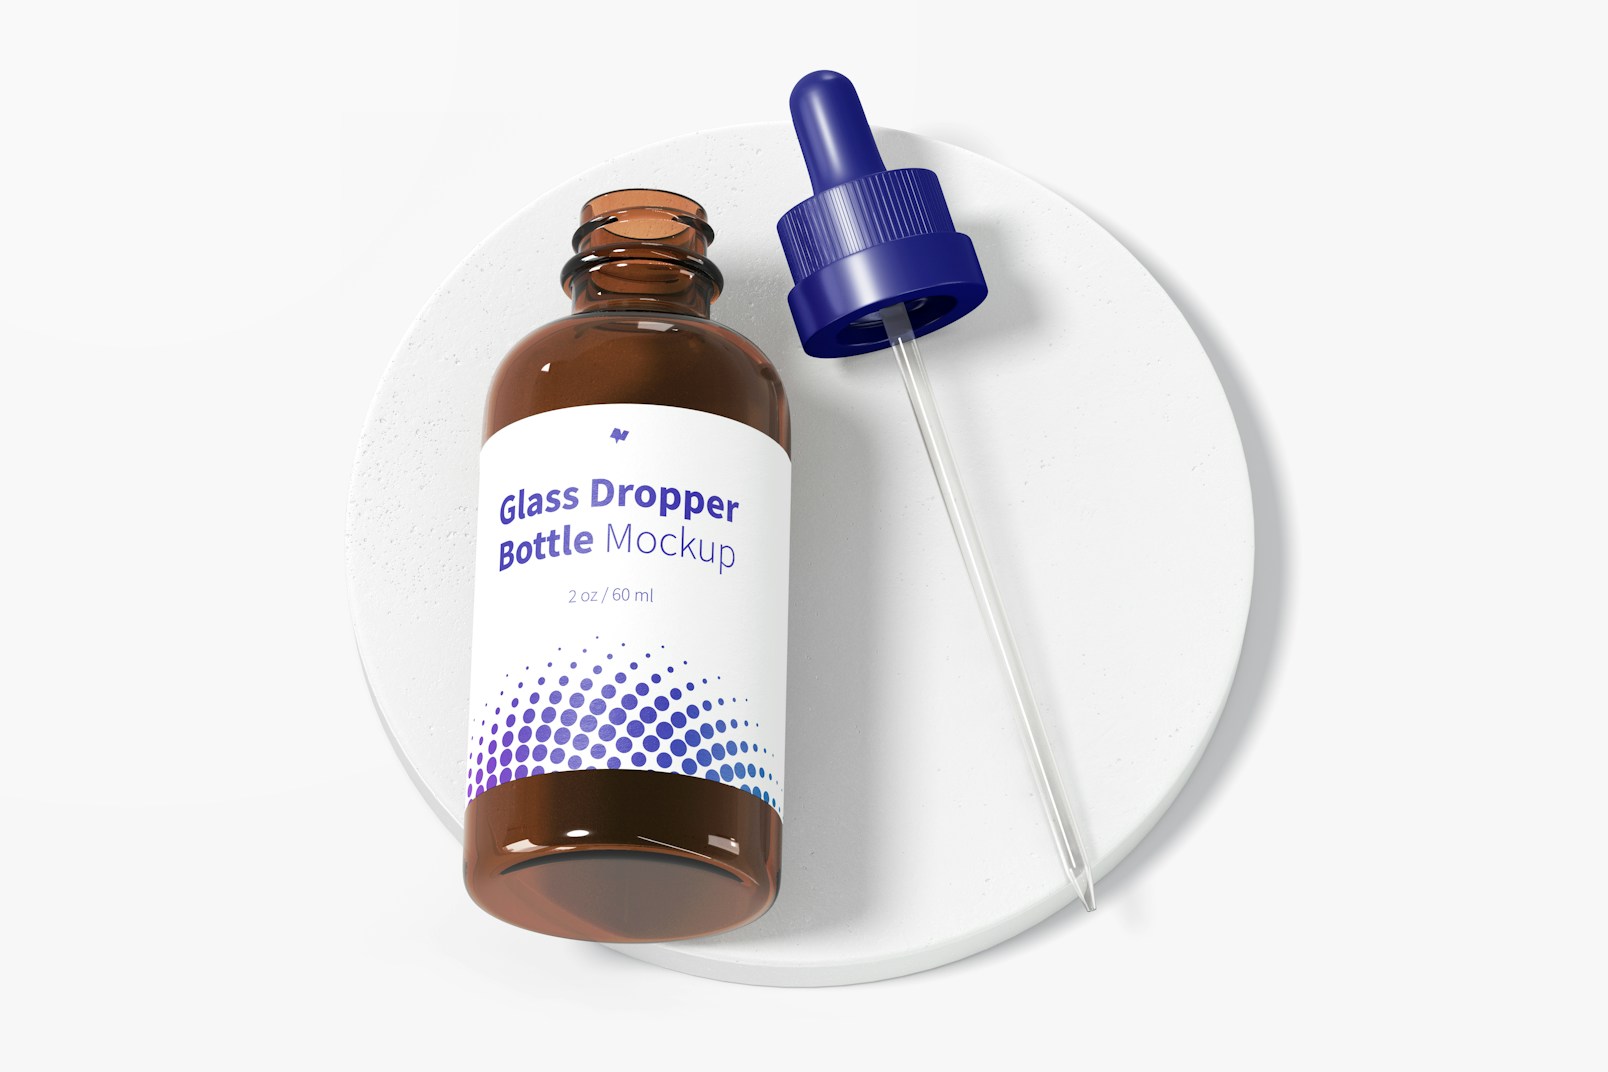 Glass Dropper Bottle Mockup, Opened